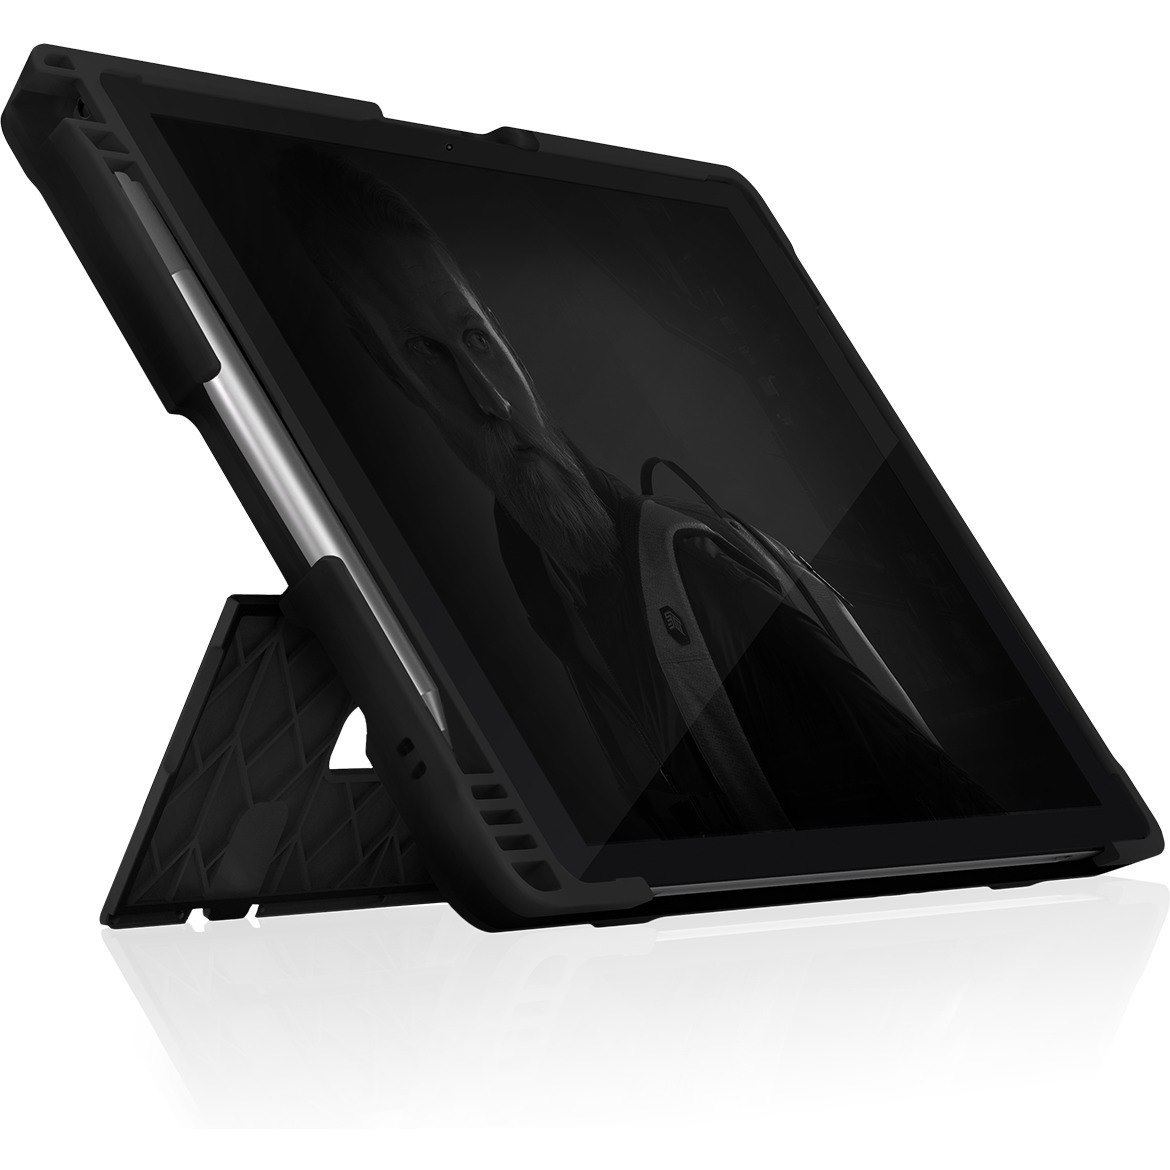 STM Goods Dux Shell Case for Microsoft Surface Pro 7, Surface Pro 6, Surface Pro (5th Gen), Surface Pro 4, Surface Pro 7+ Tablet - Textured - Black, Transparent